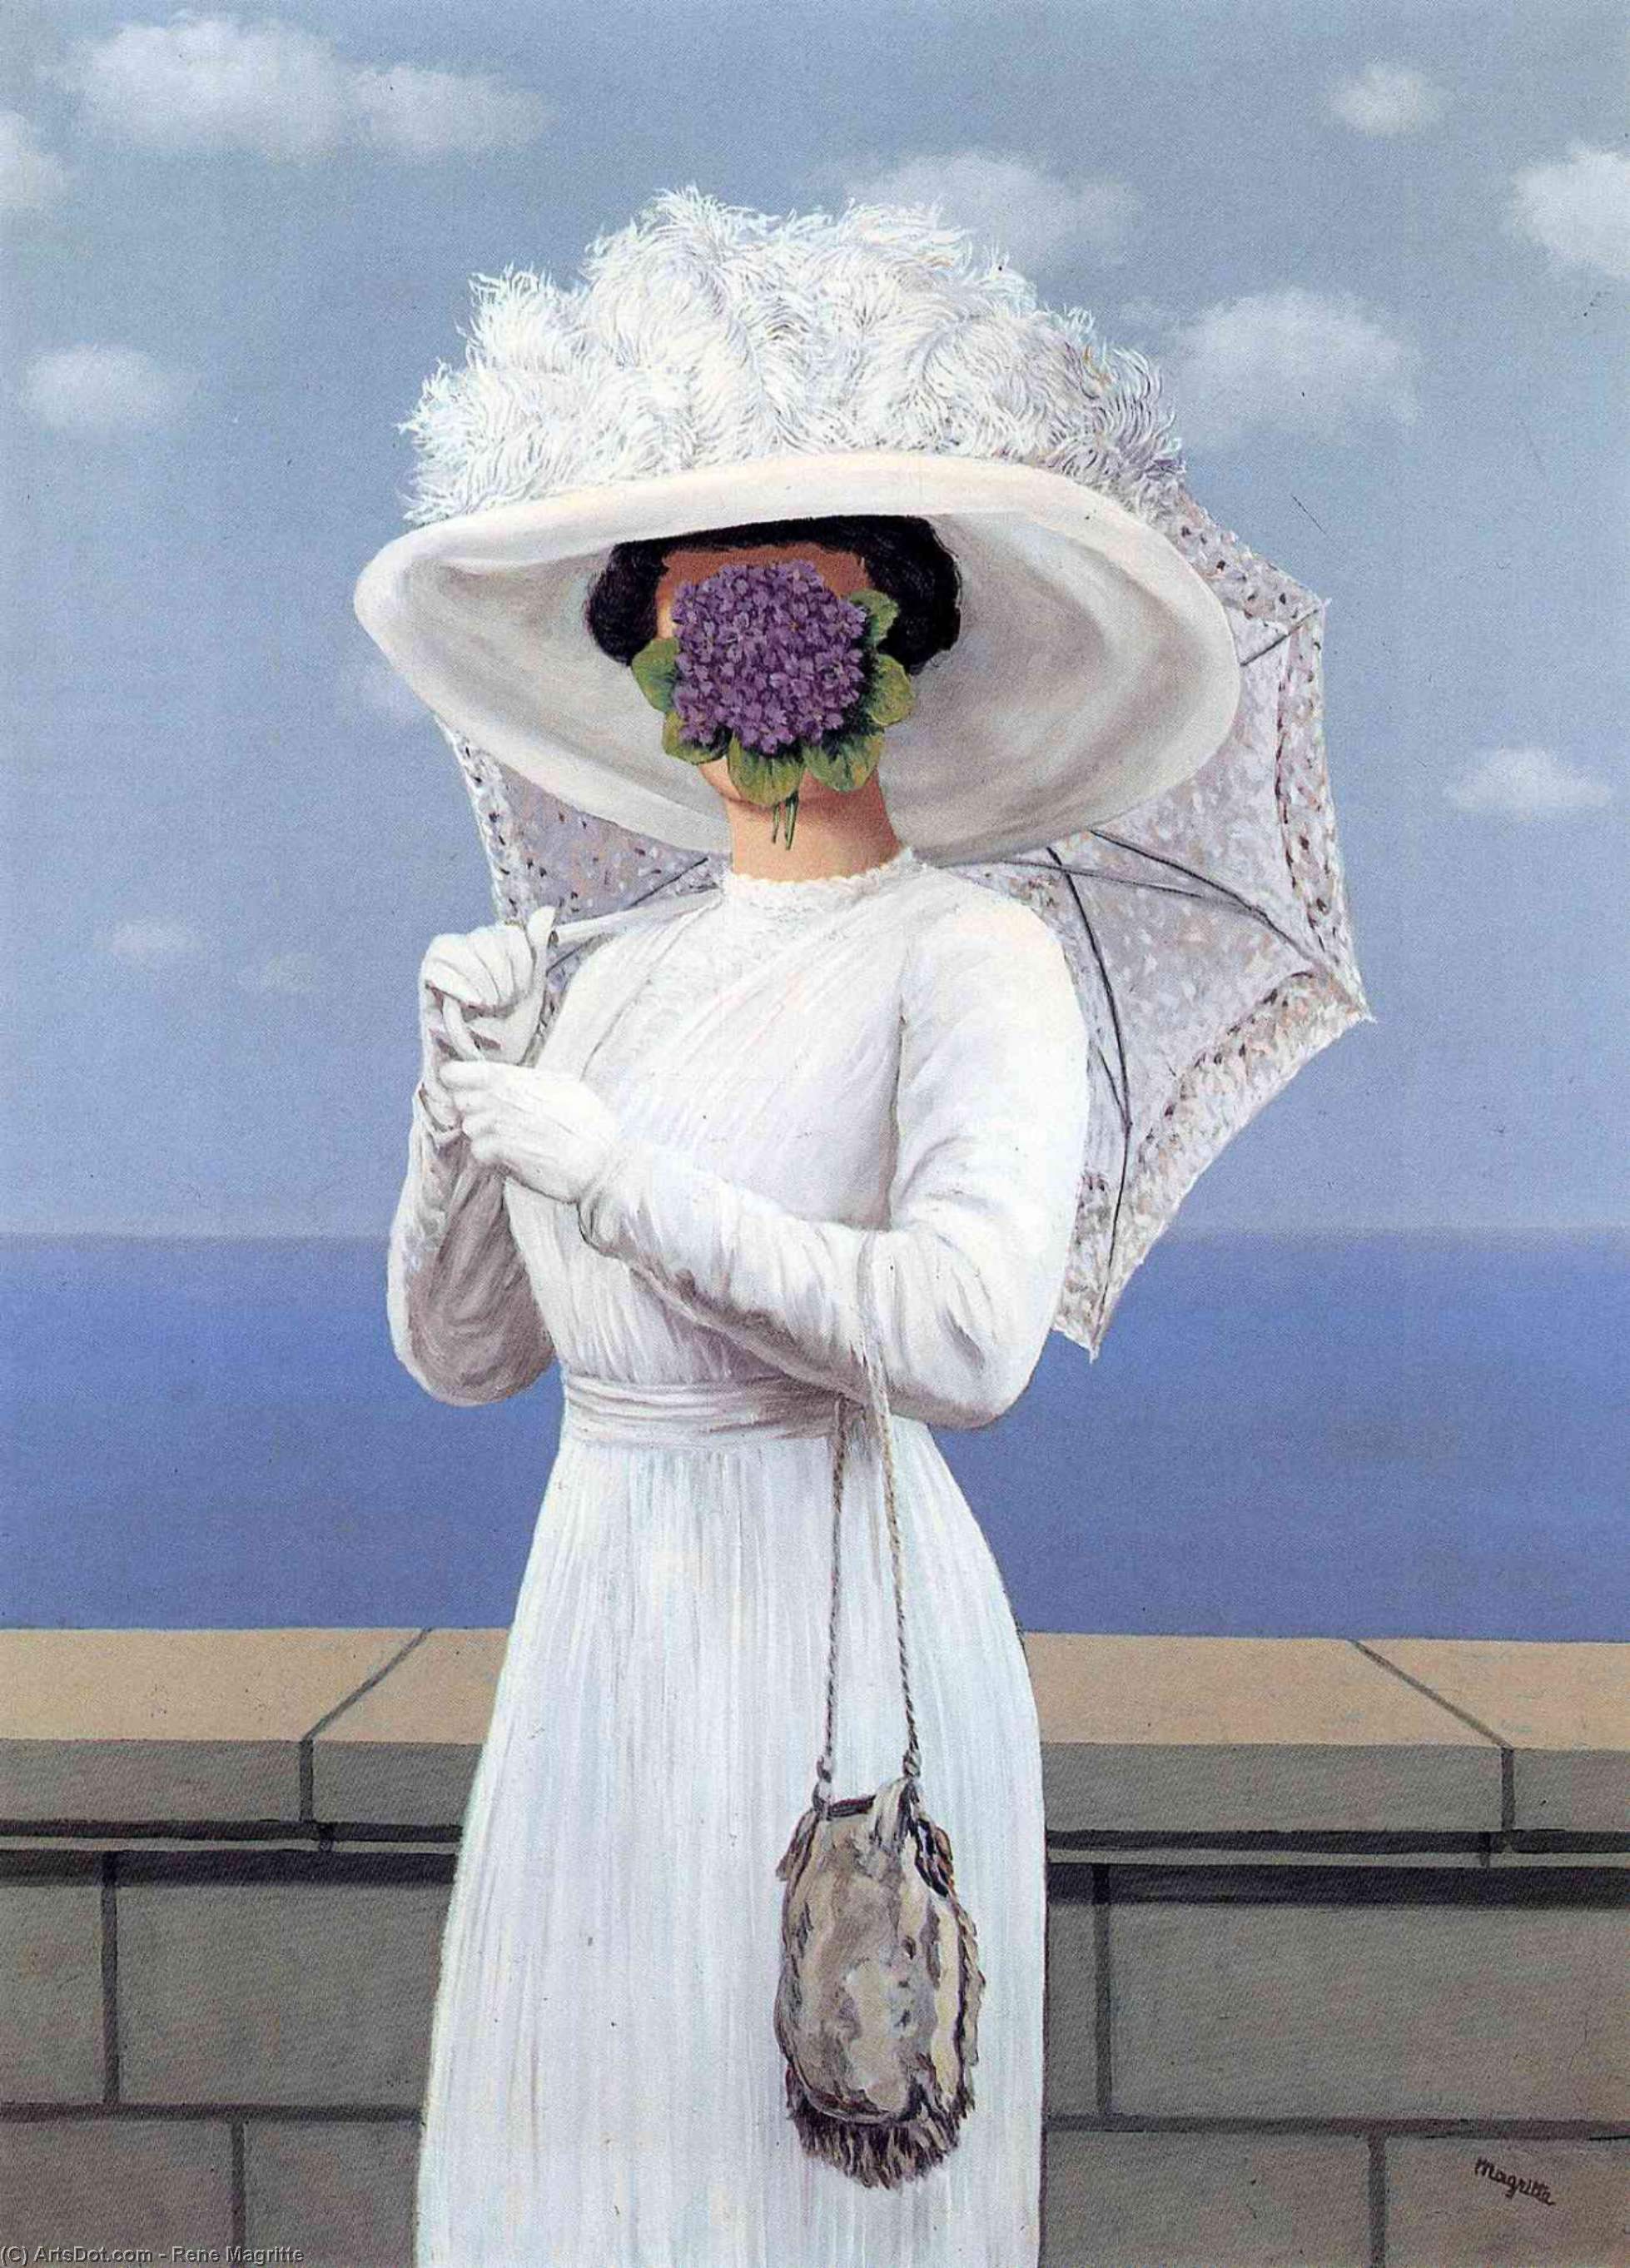 WikiOO.org - Encyclopedia of Fine Arts - Lukisan, Artwork Rene Magritte - The Great War